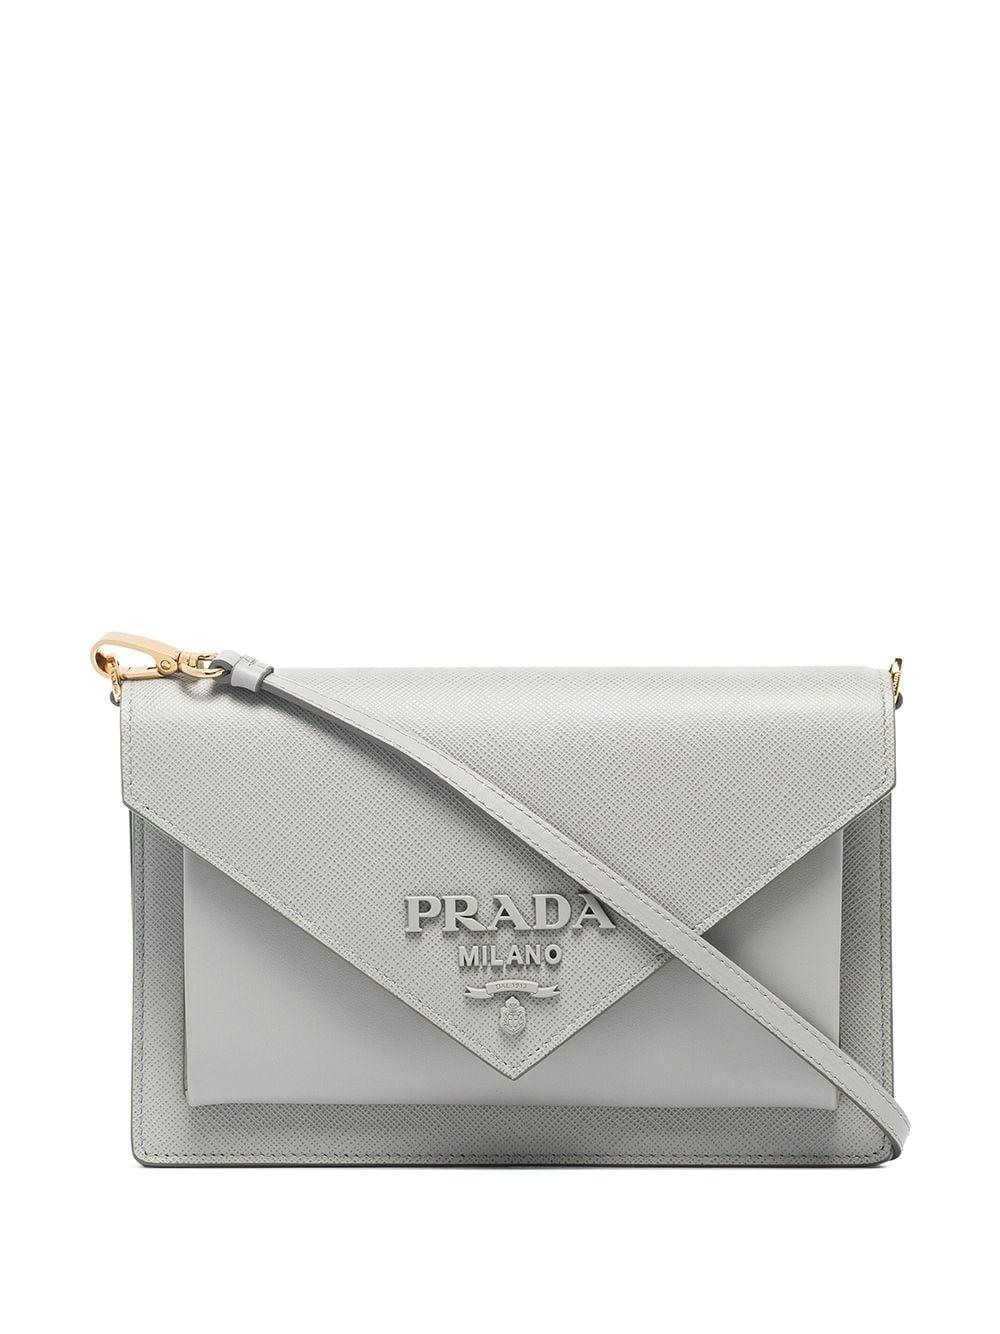 Prada Envelope Leather Cross Body Bag in Gray | Lyst